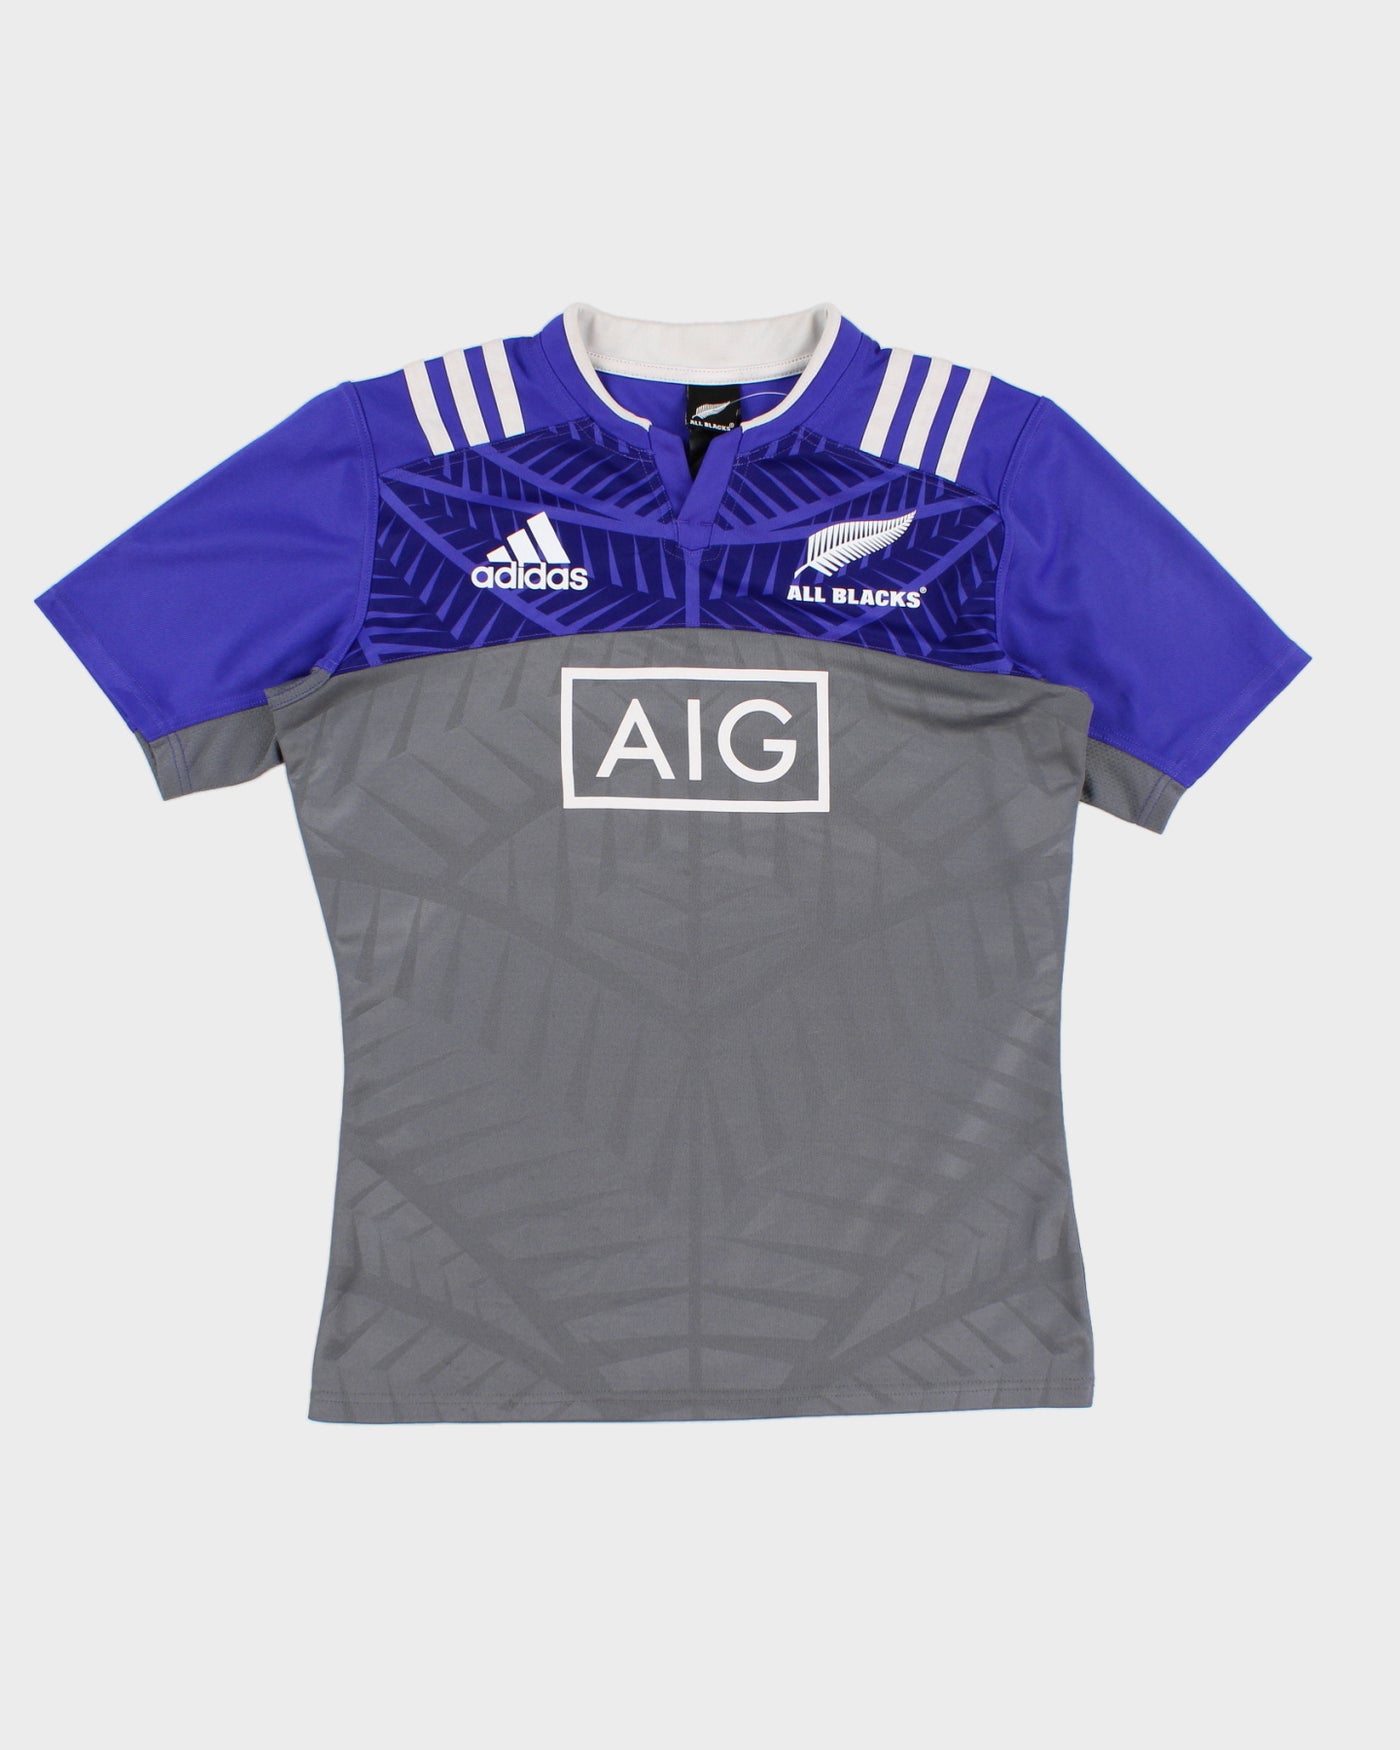 Adidas New Zealand Rugby Shirt - L